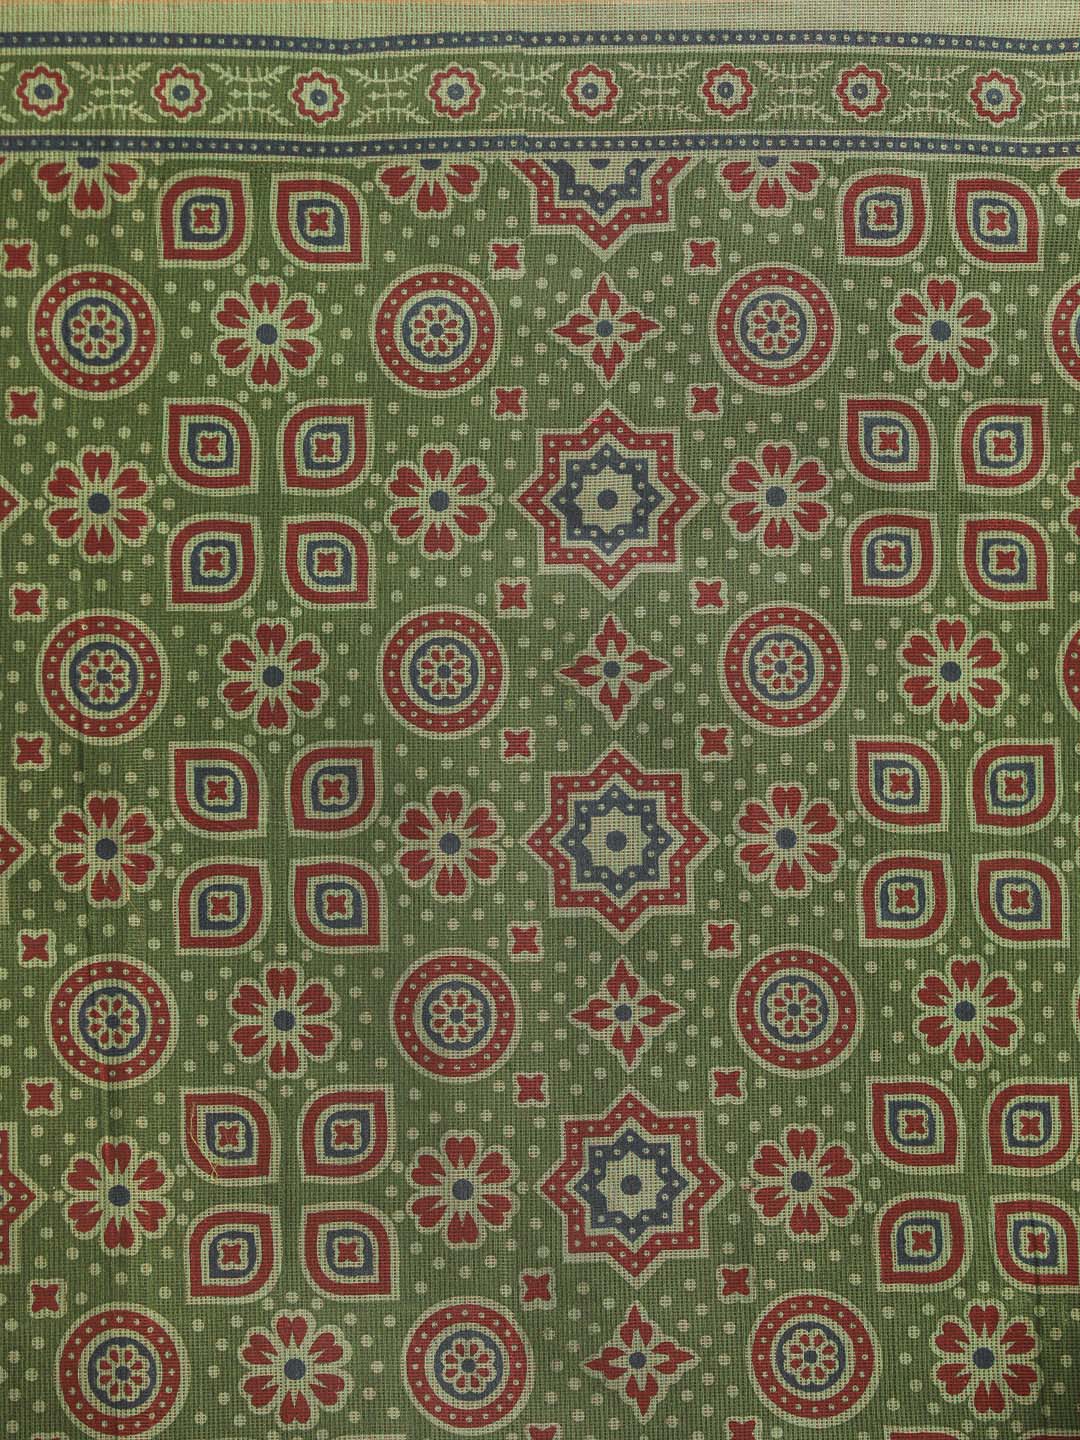 Indethnic Printed Super Net Saree in Green - Saree Detail View